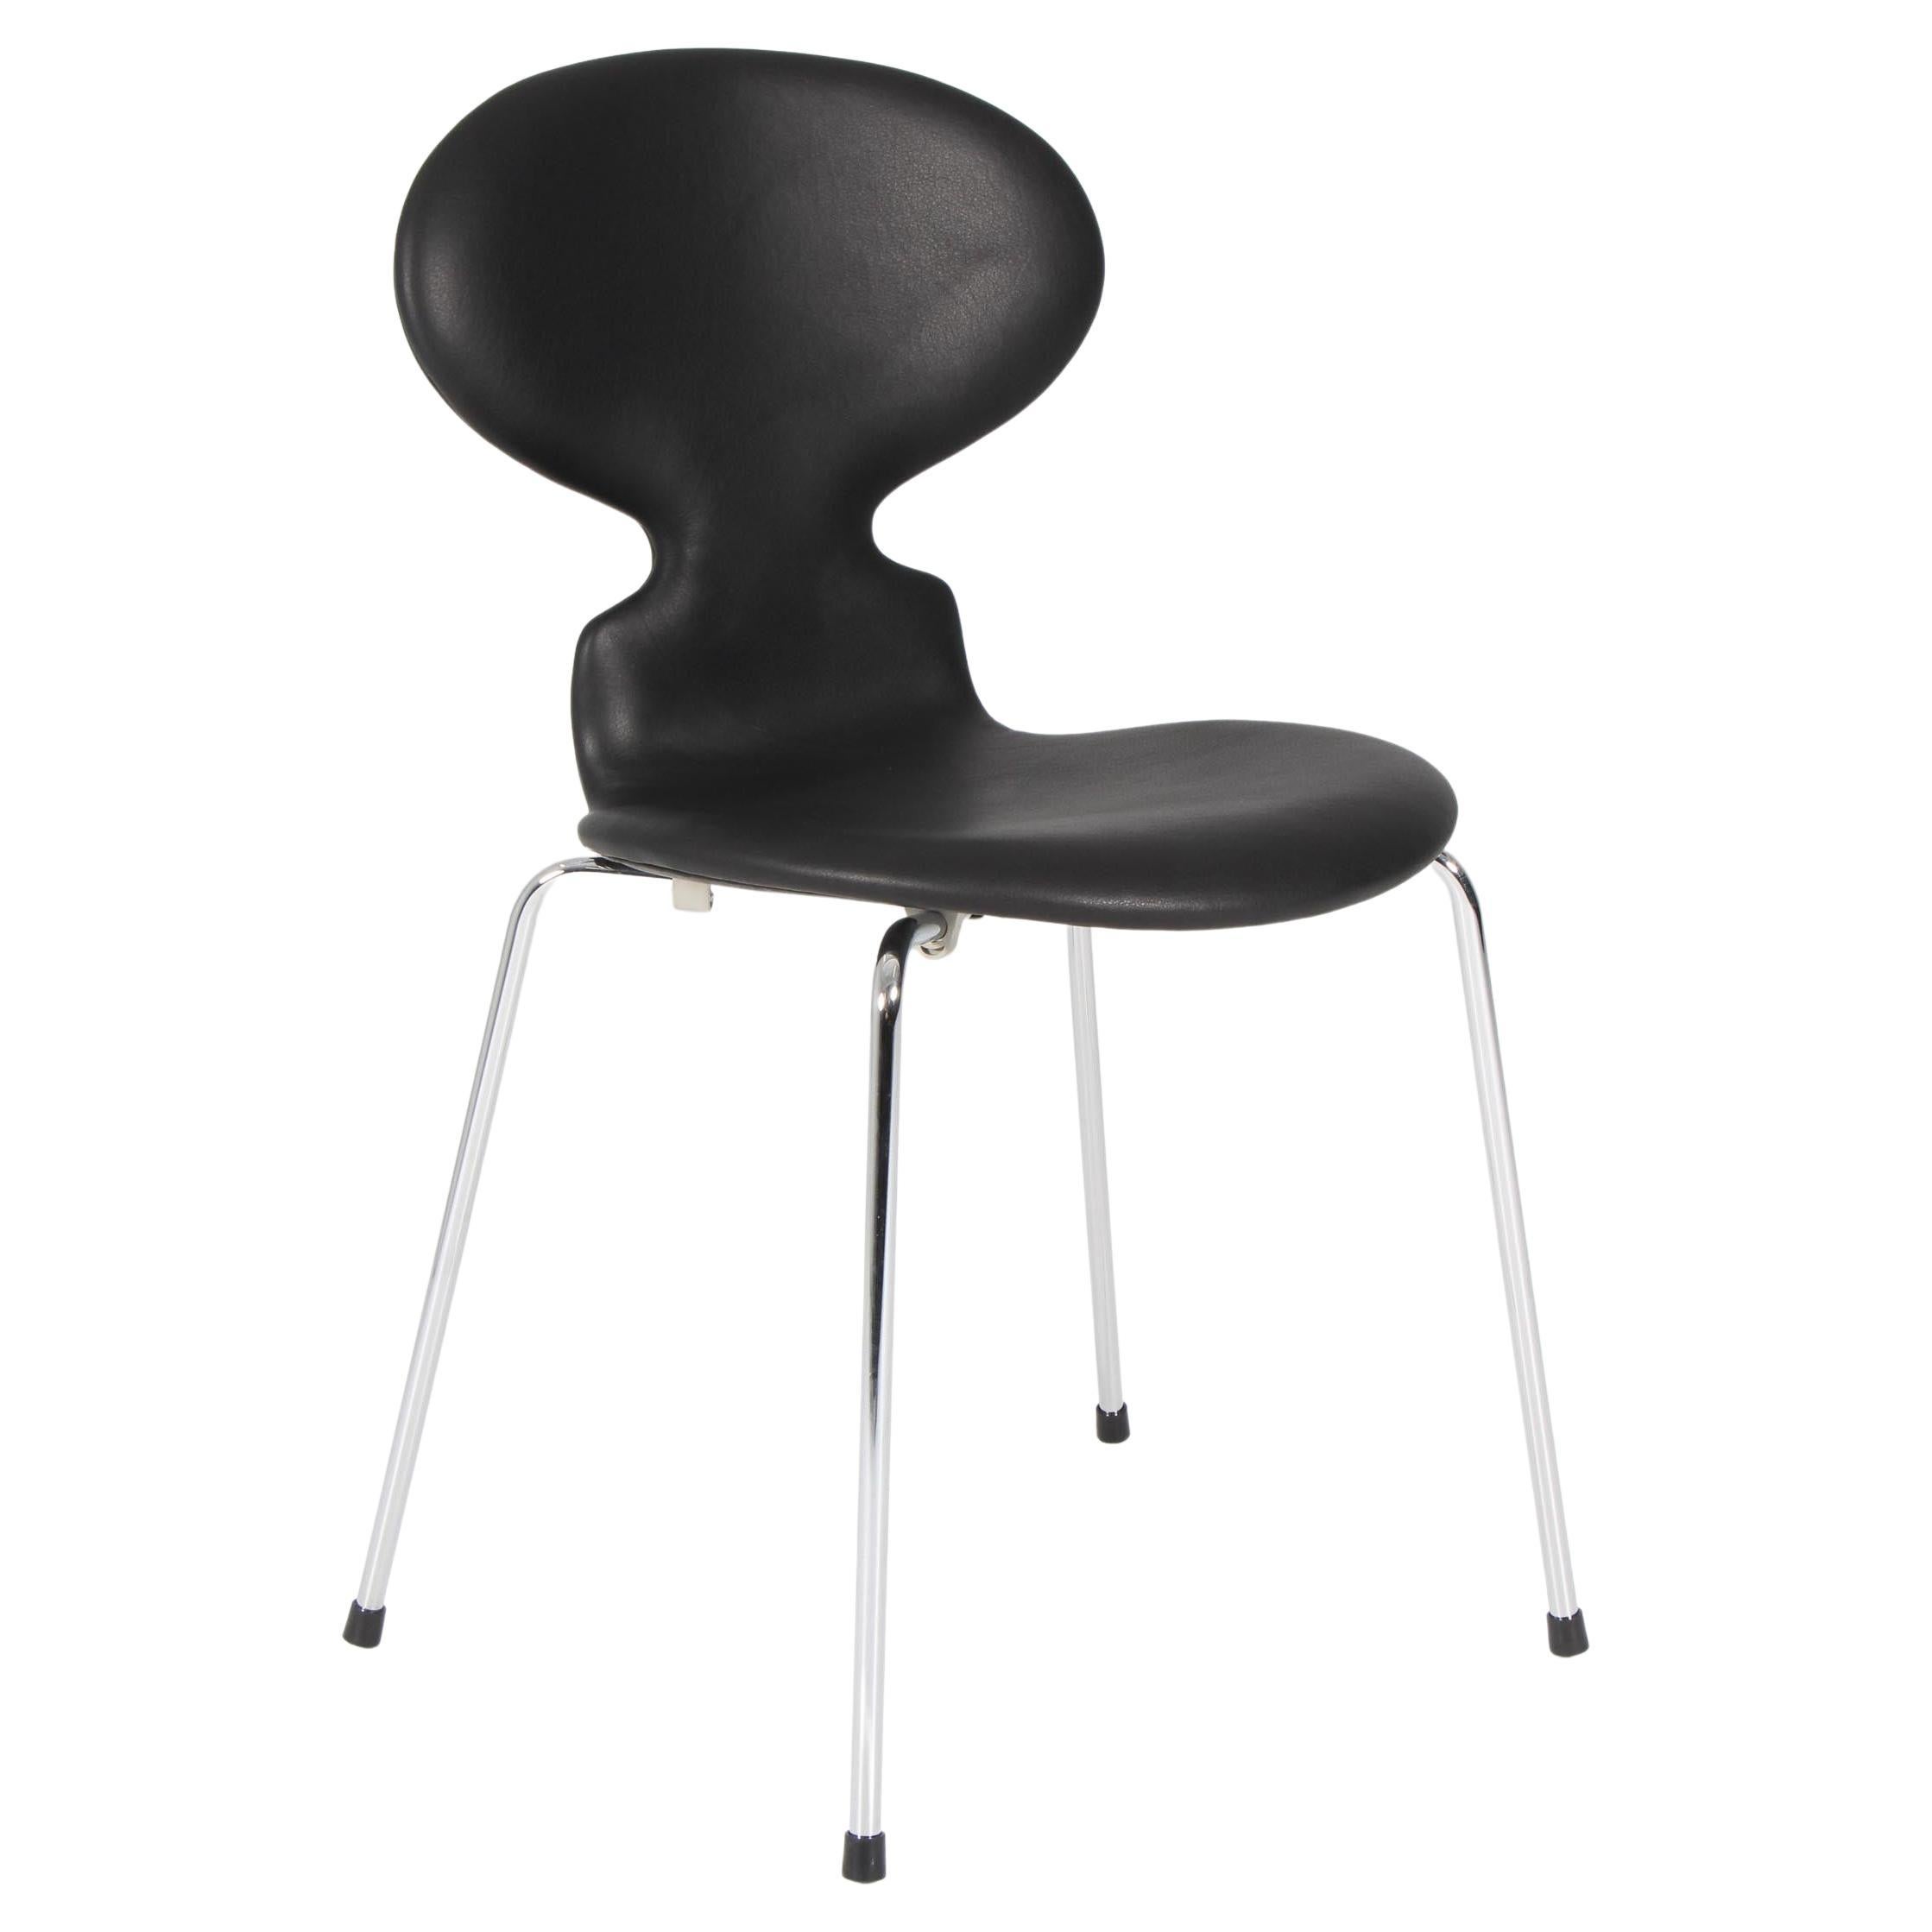 Arne Jacobsen, Dining Chair Model 3101 "Ant" For Sale